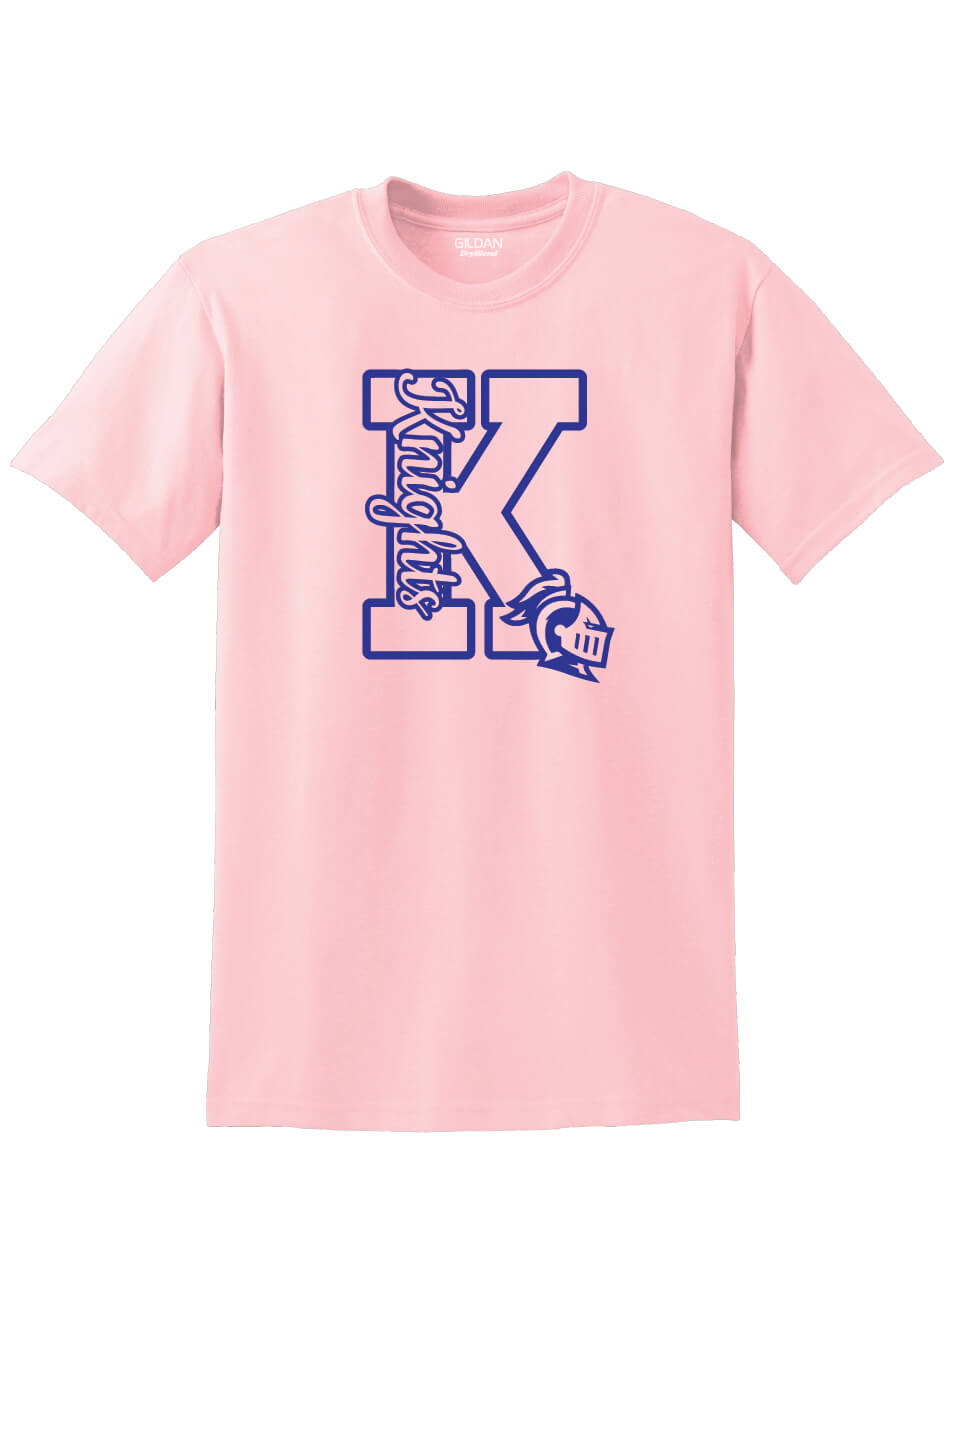 Knights "K" Short Sleeve T-Shirt pink